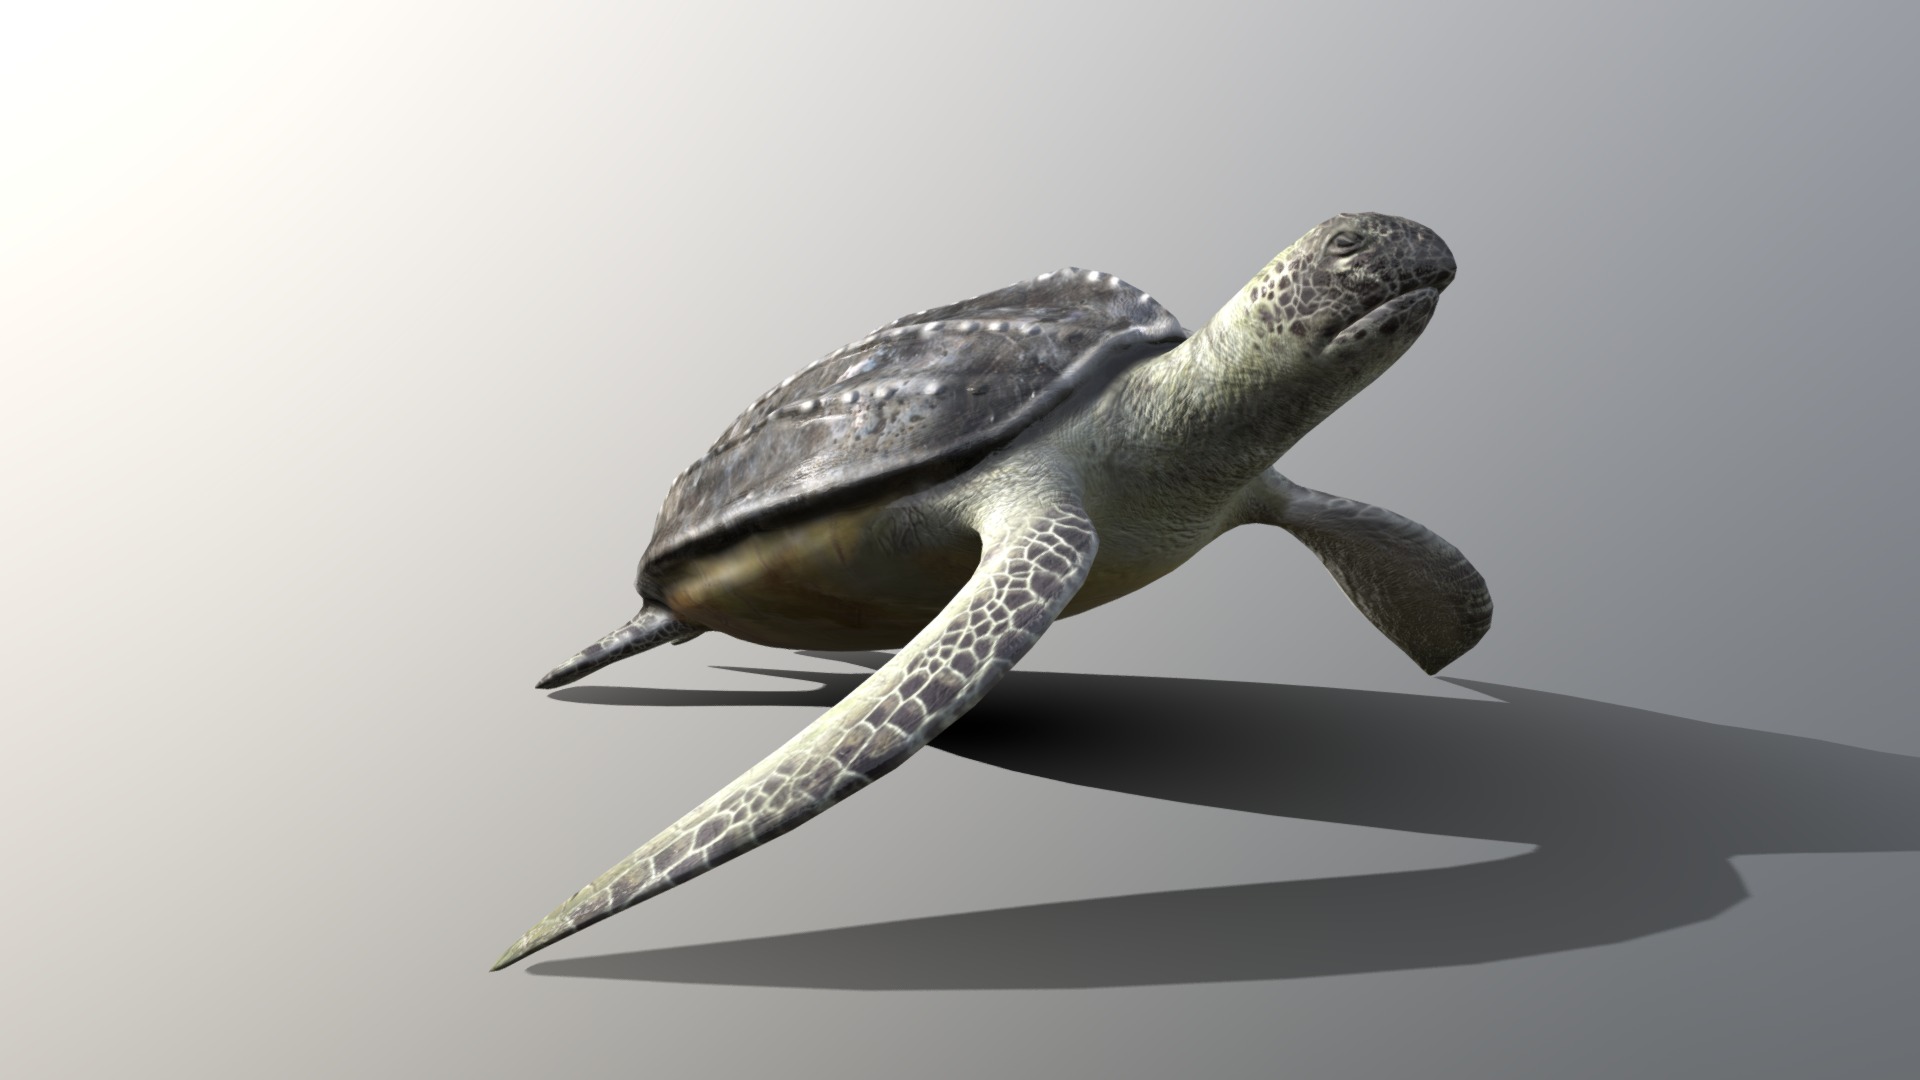 3D model Leatherback Sea Turtle Dermochelys Coriacea - This is a 3D model of the Leatherback Sea Turtle Dermochelys Coriacea. The 3D model is about a sea turtle on a white background.